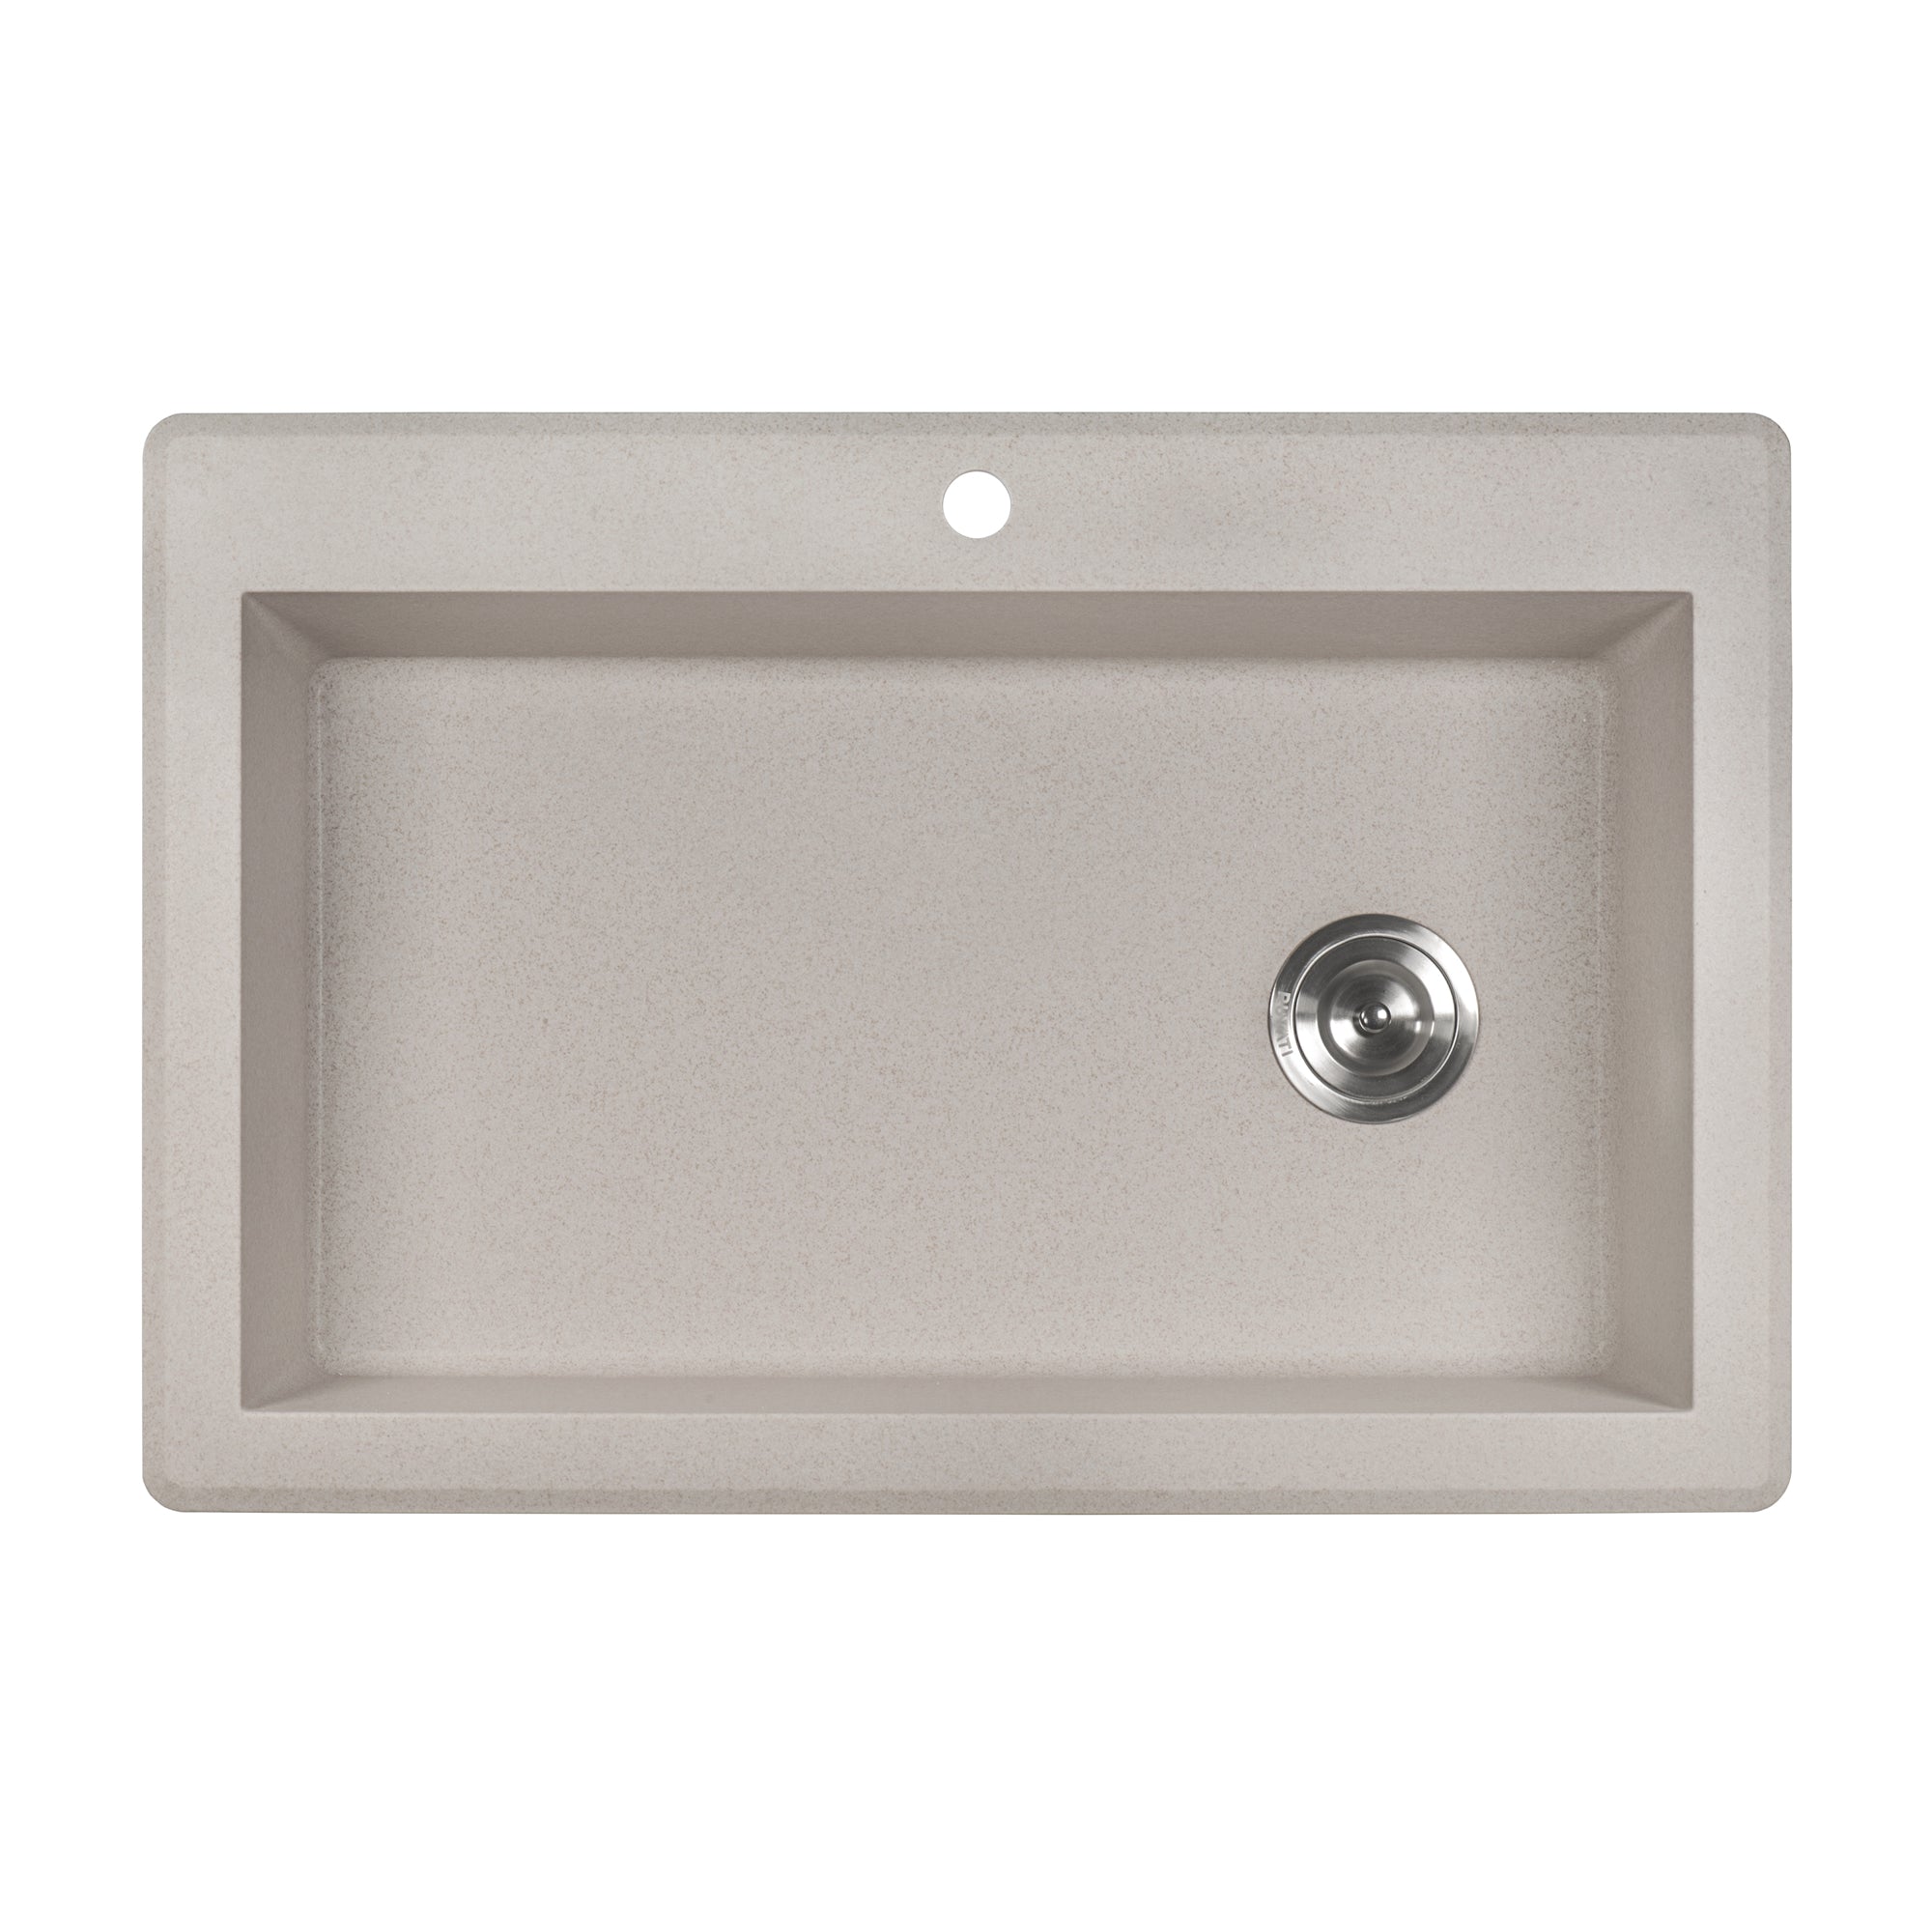 Ruvati 33 x 22" epiGranite Dual-Mount Granite Composite Single Bowl Kitchen Sink